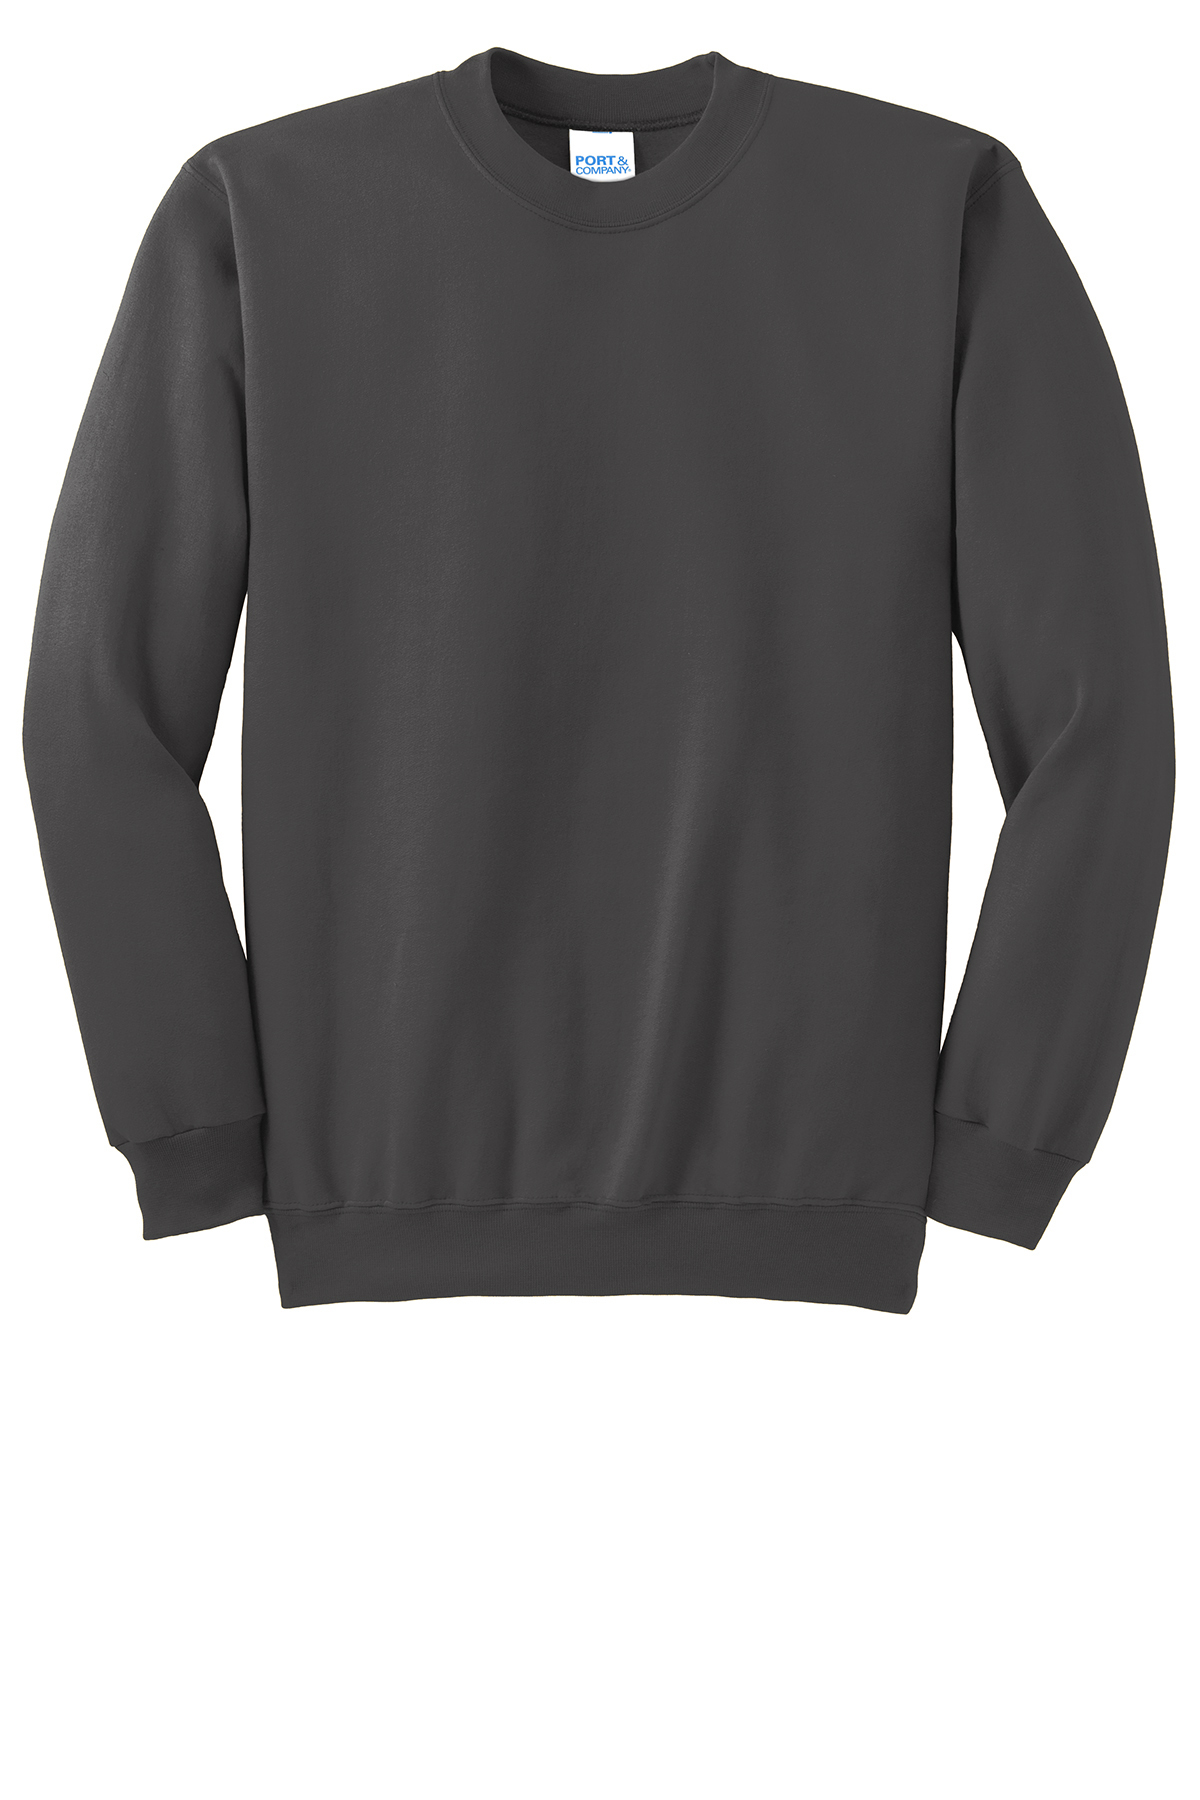 Port & Company Essential Fleece Crewneck Sweatshirt | Product ...